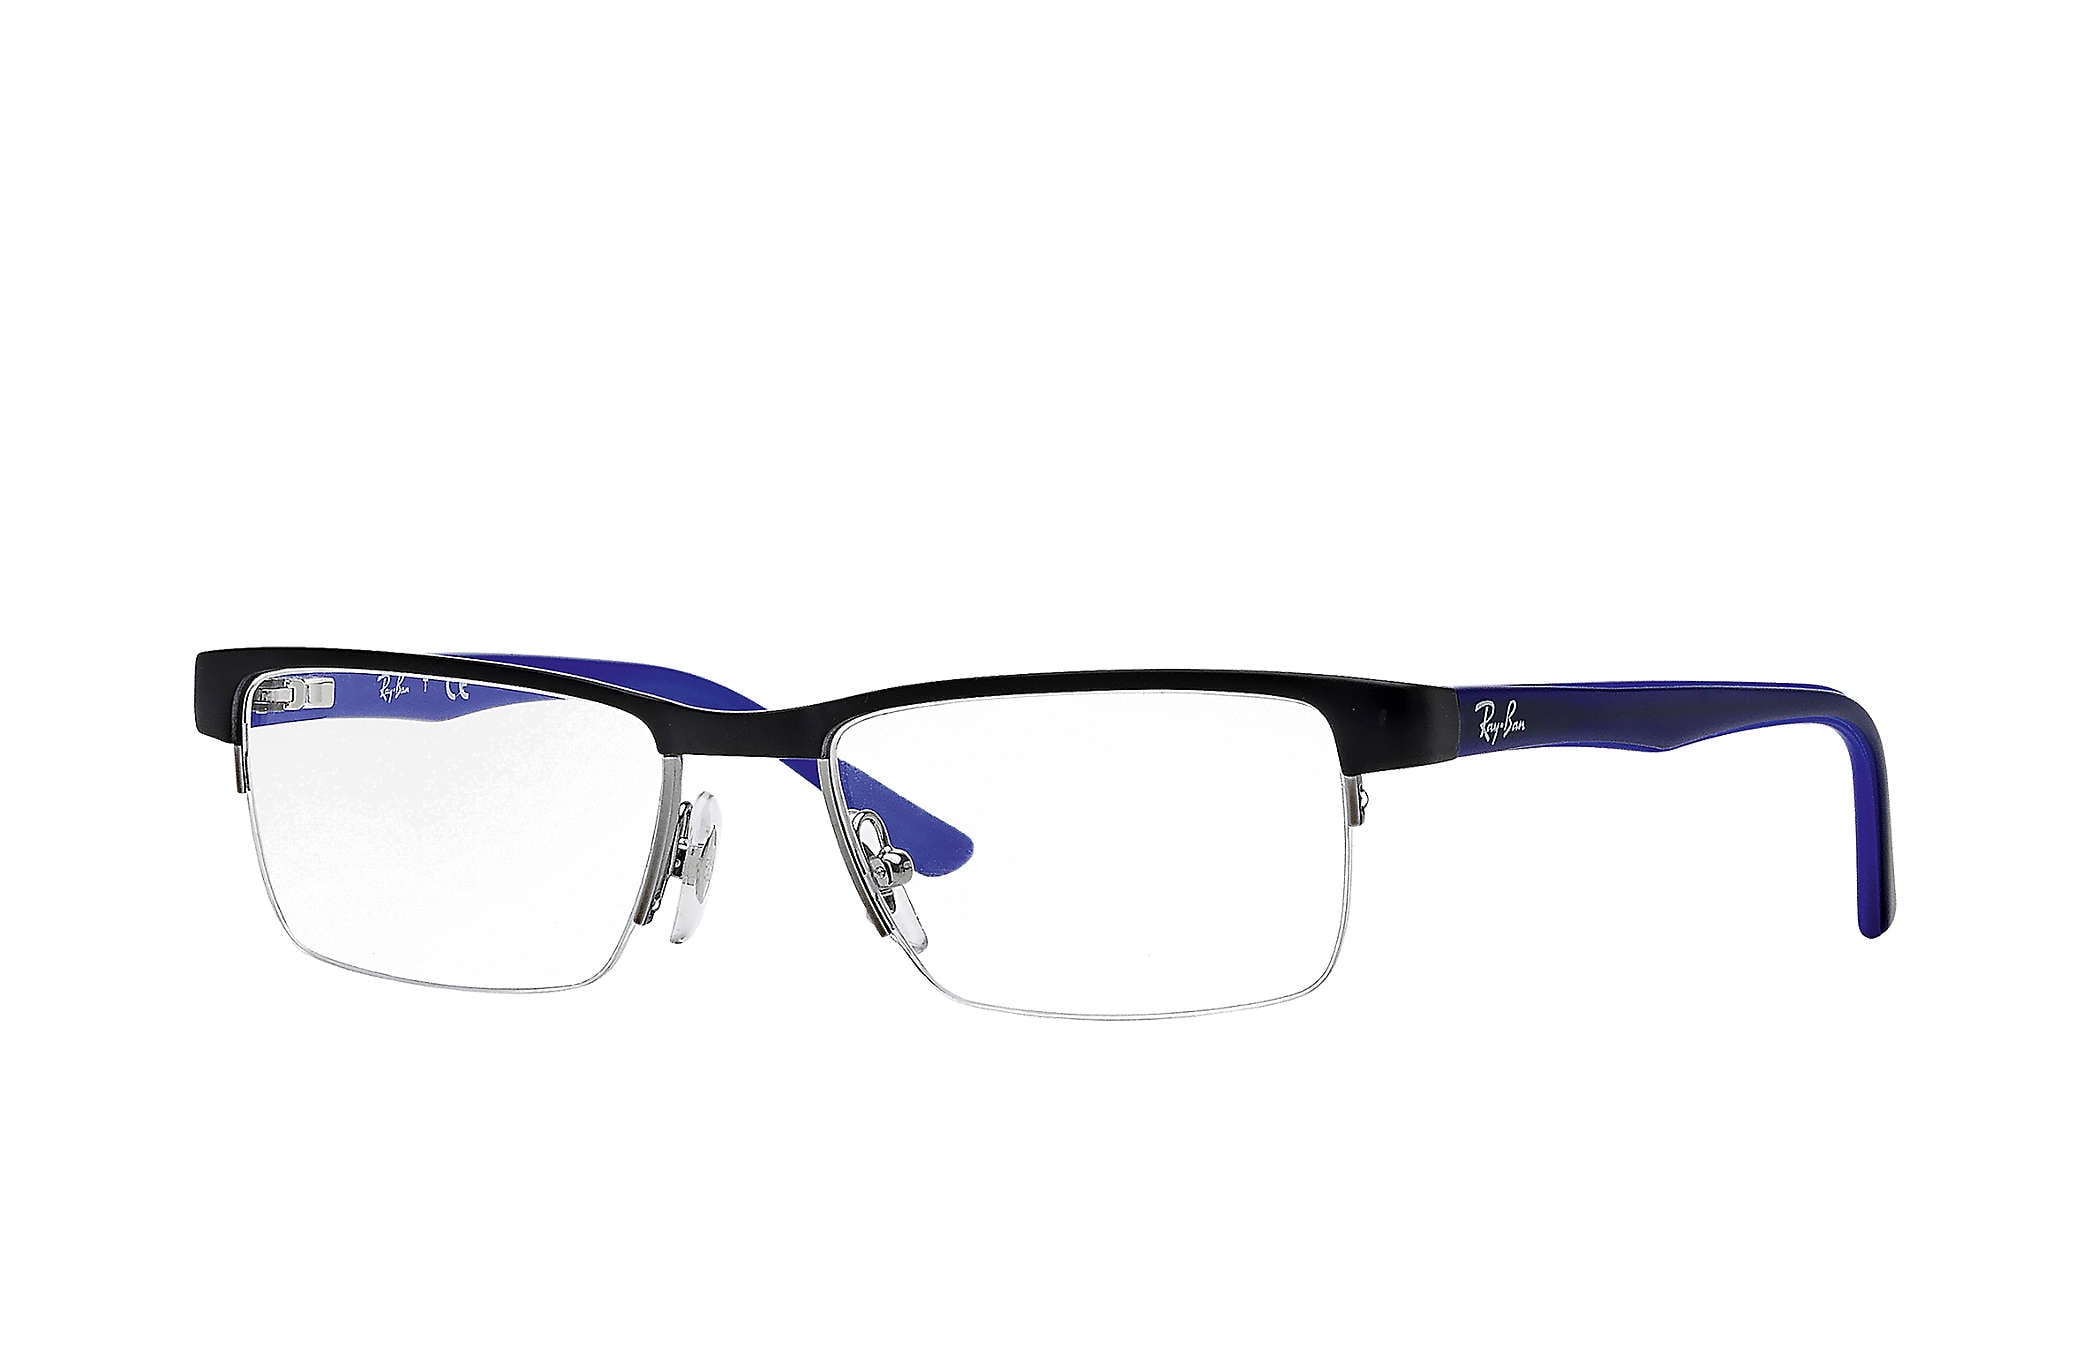 Ray-Ban Junior Kid's Semi-Rimless Eyeglass Frames RB1034 46mm Black/Blue -  